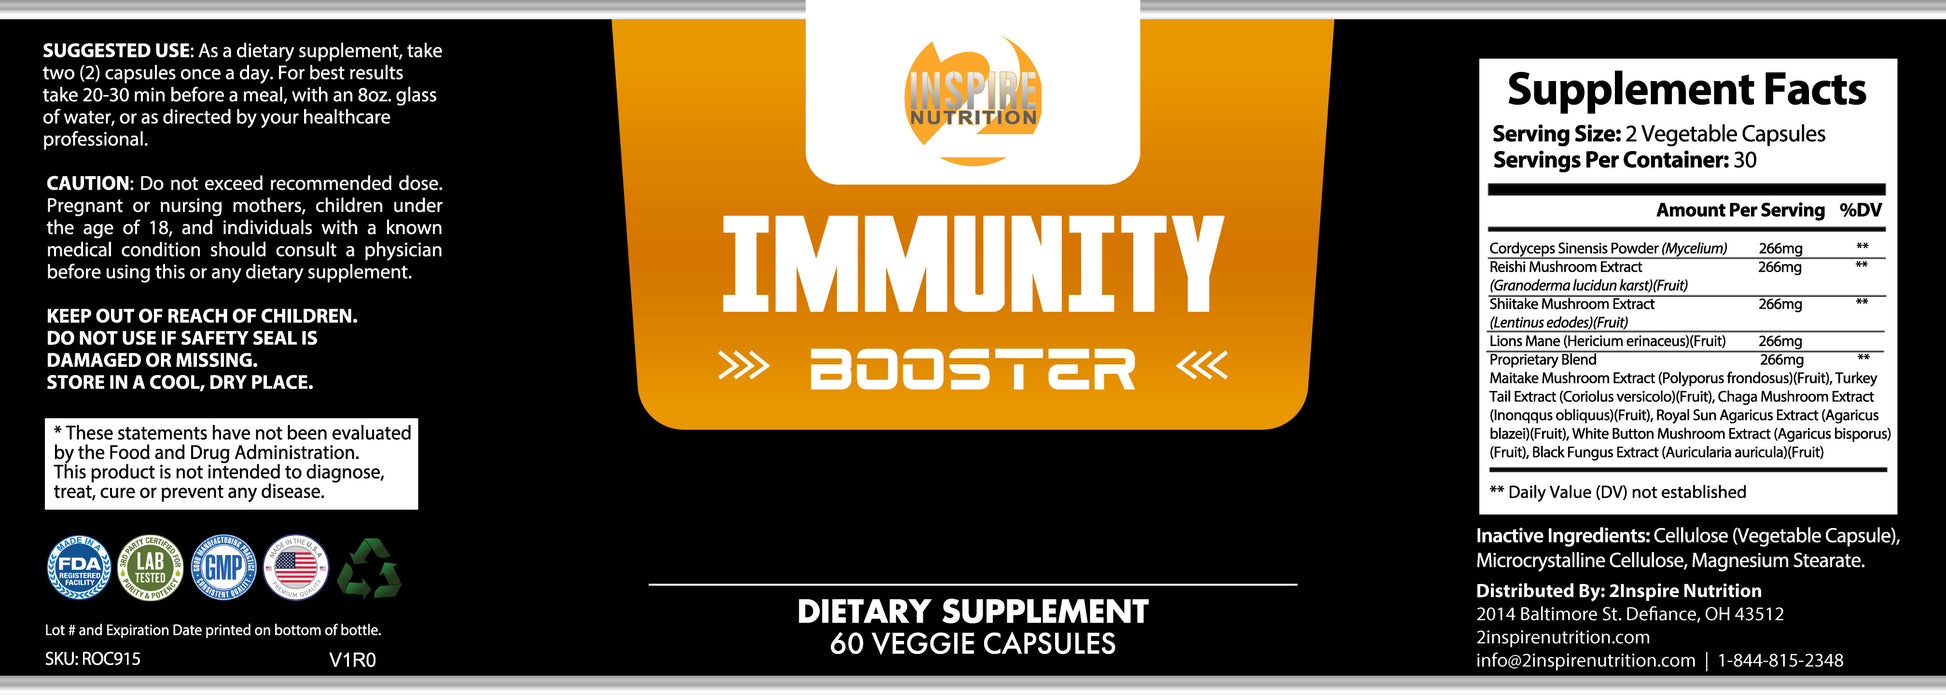 Immunity Booster Wrapper